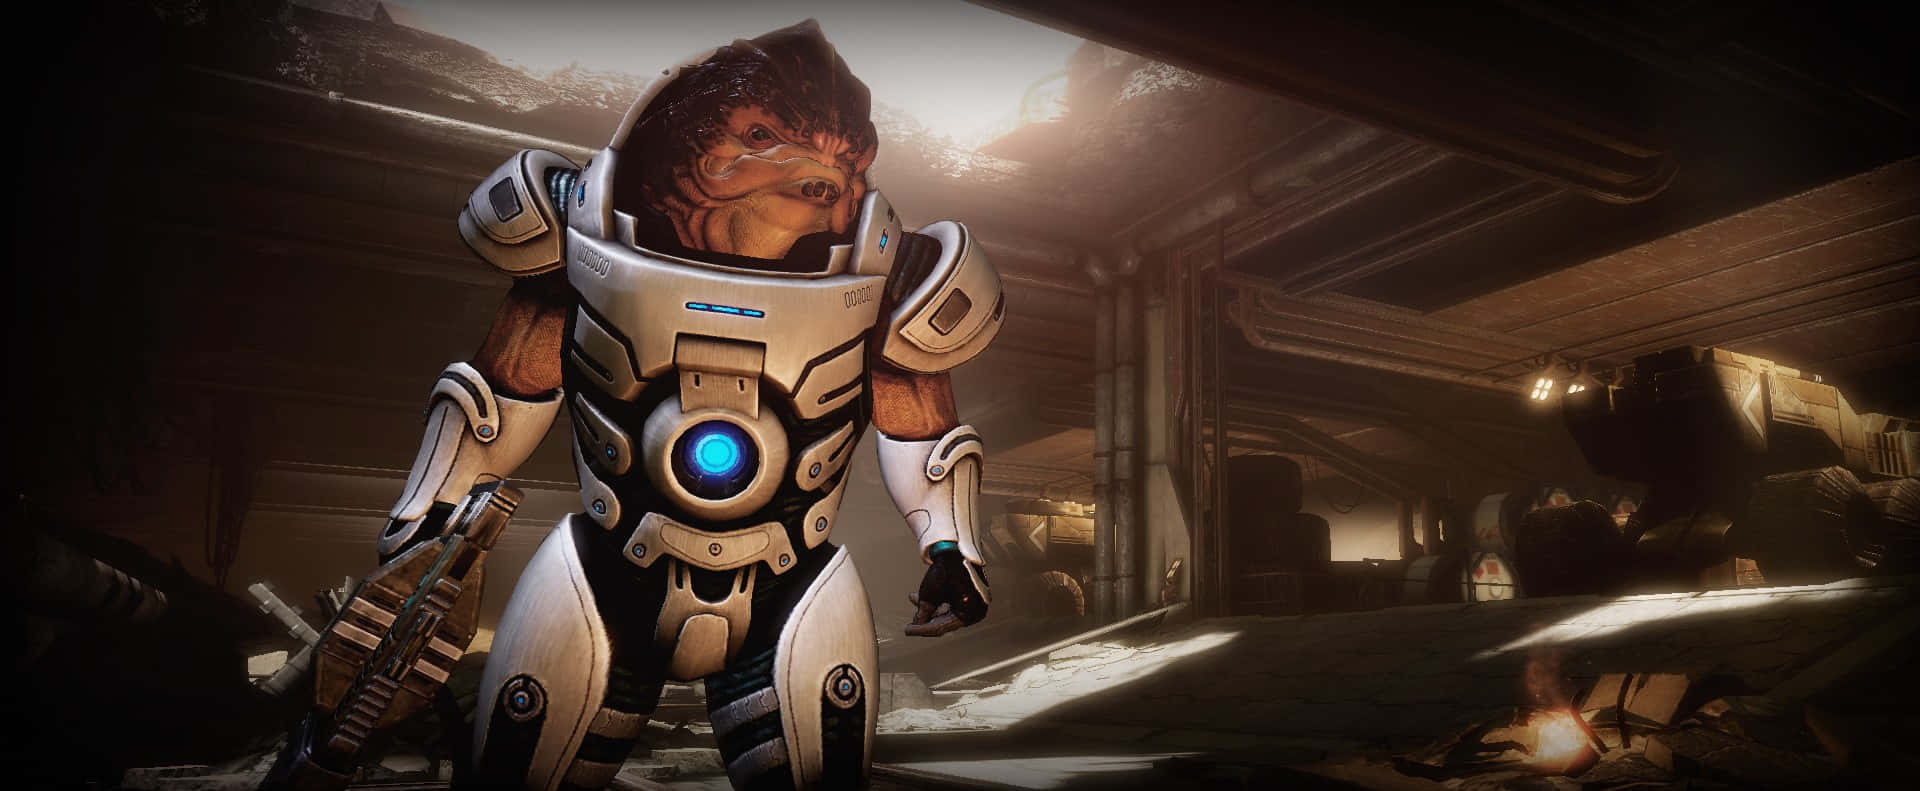 Grunt, the mighty Krogan warrior, from Mass Effect standing with a fierce look on a battlefield Wallpaper